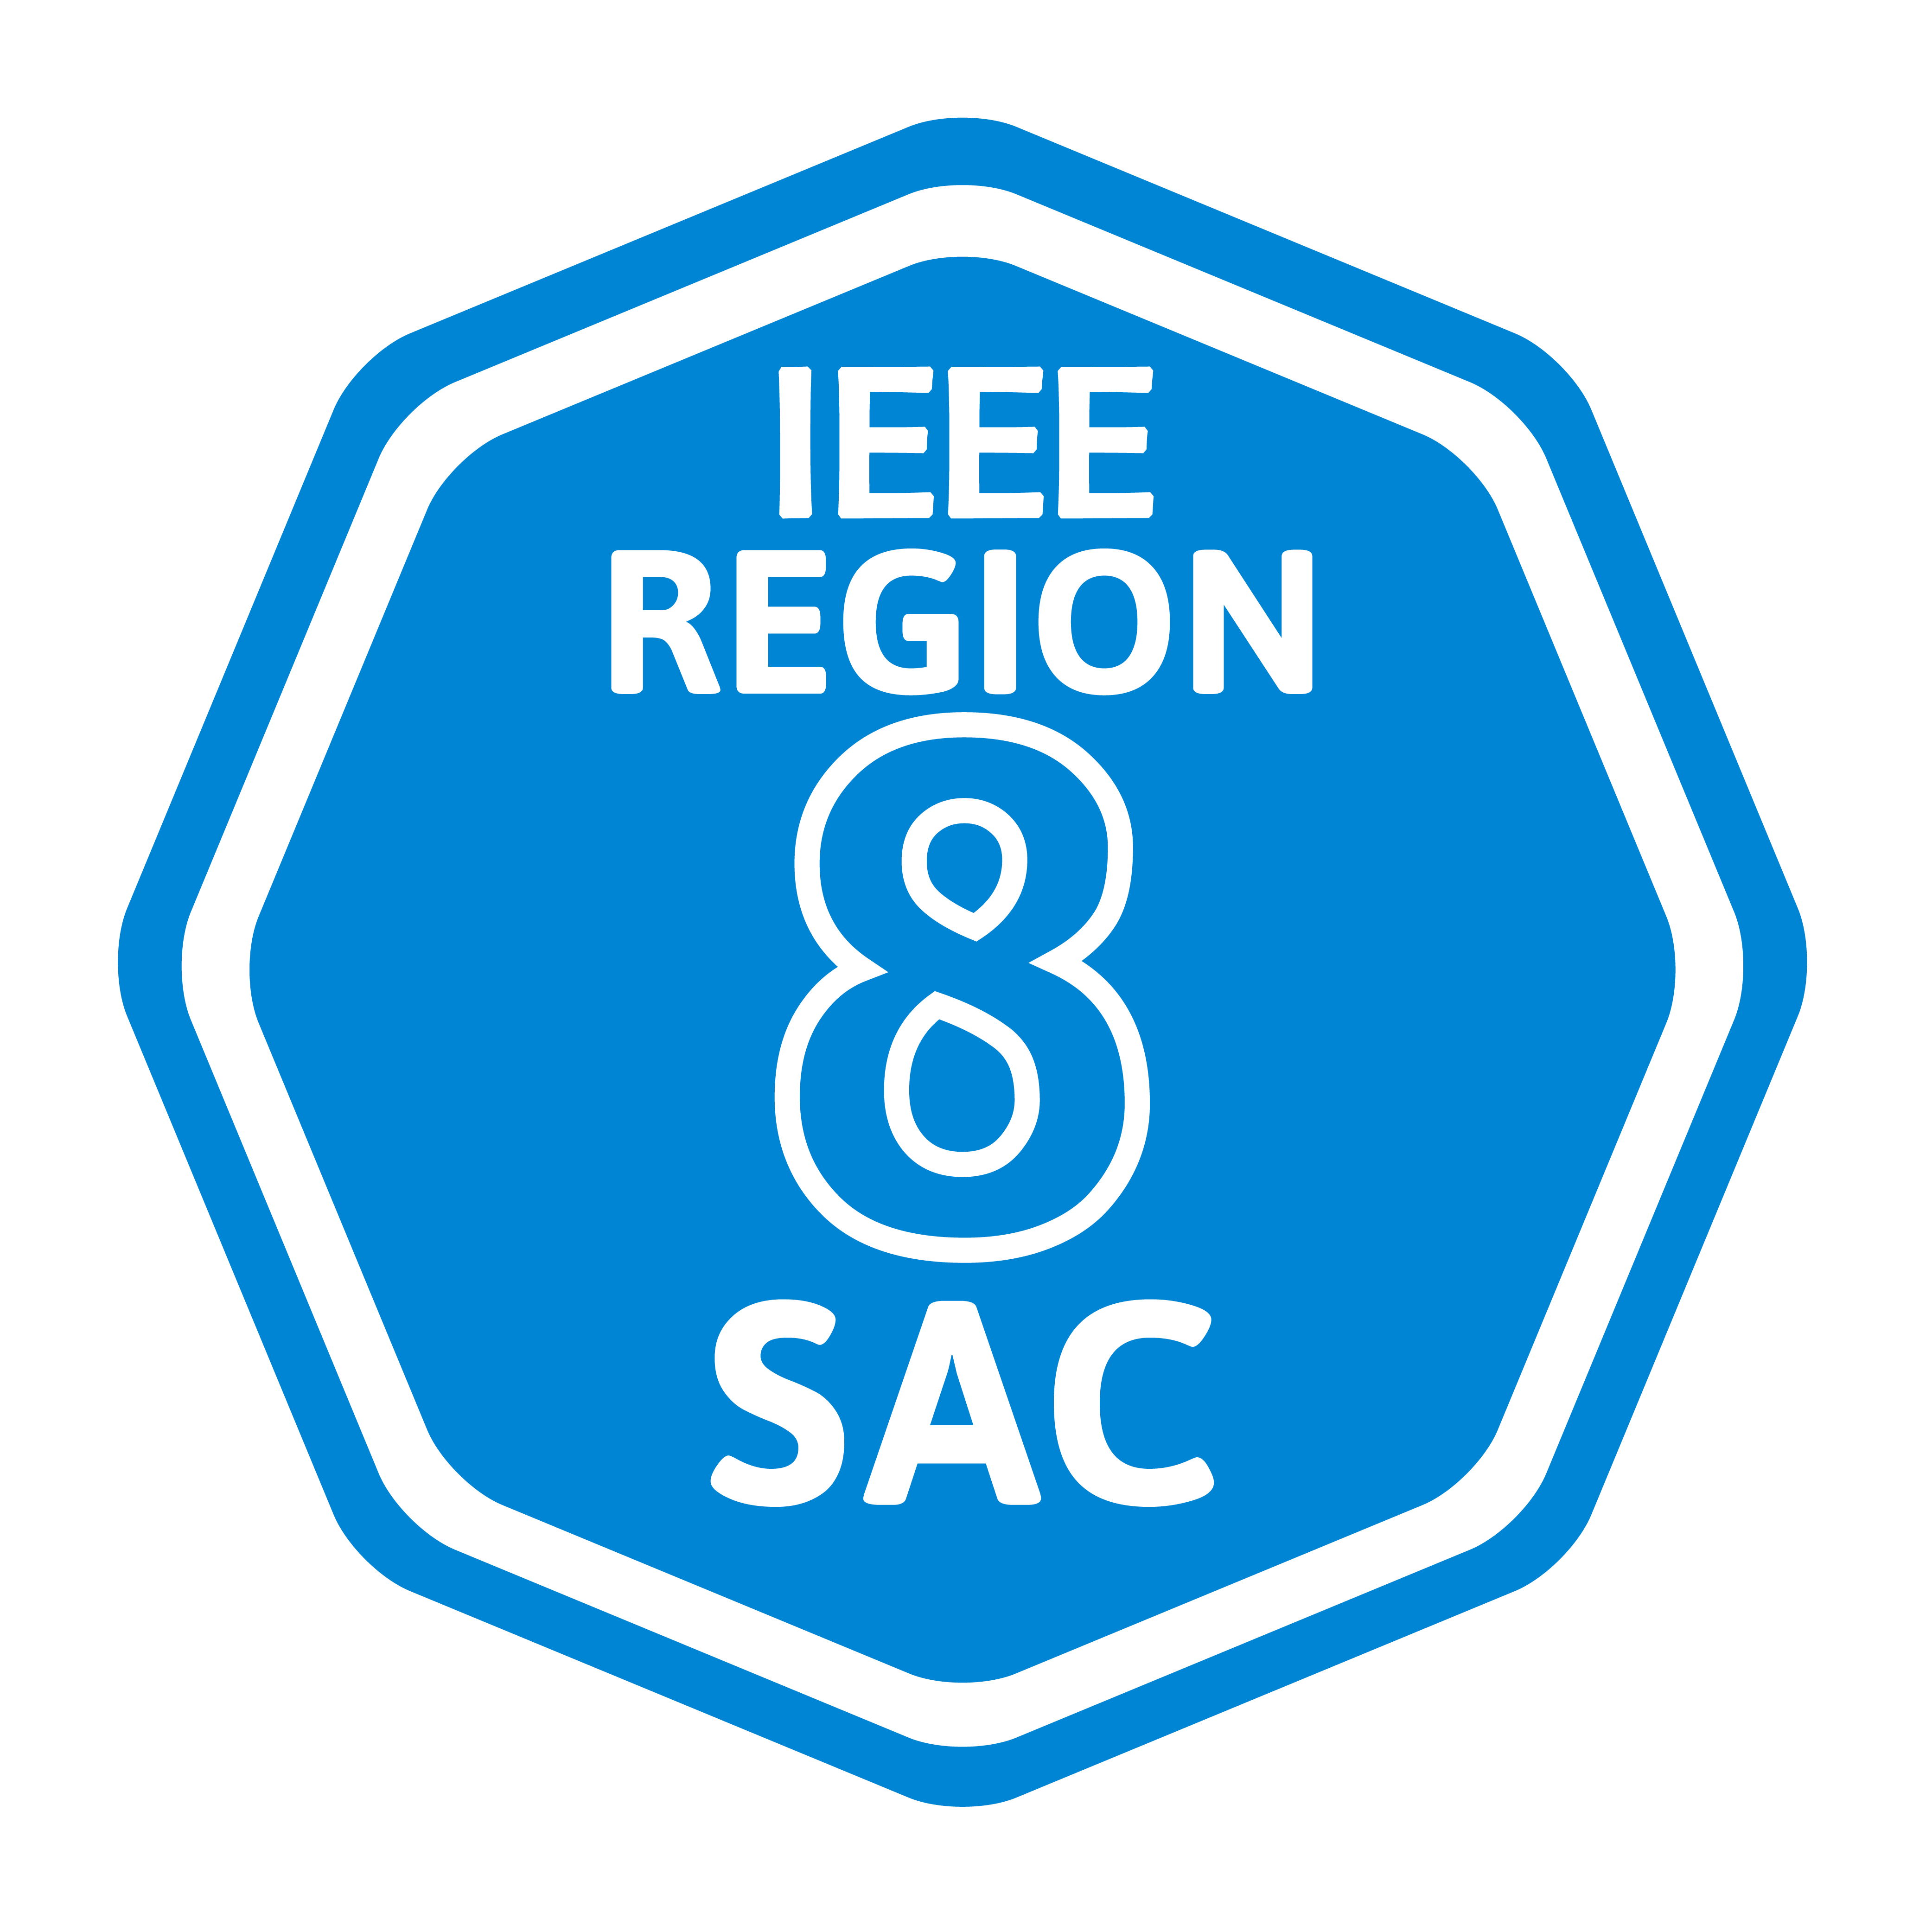 Region 8. Sac лого. IEEE. 8 Регион. Sac PNG logo.